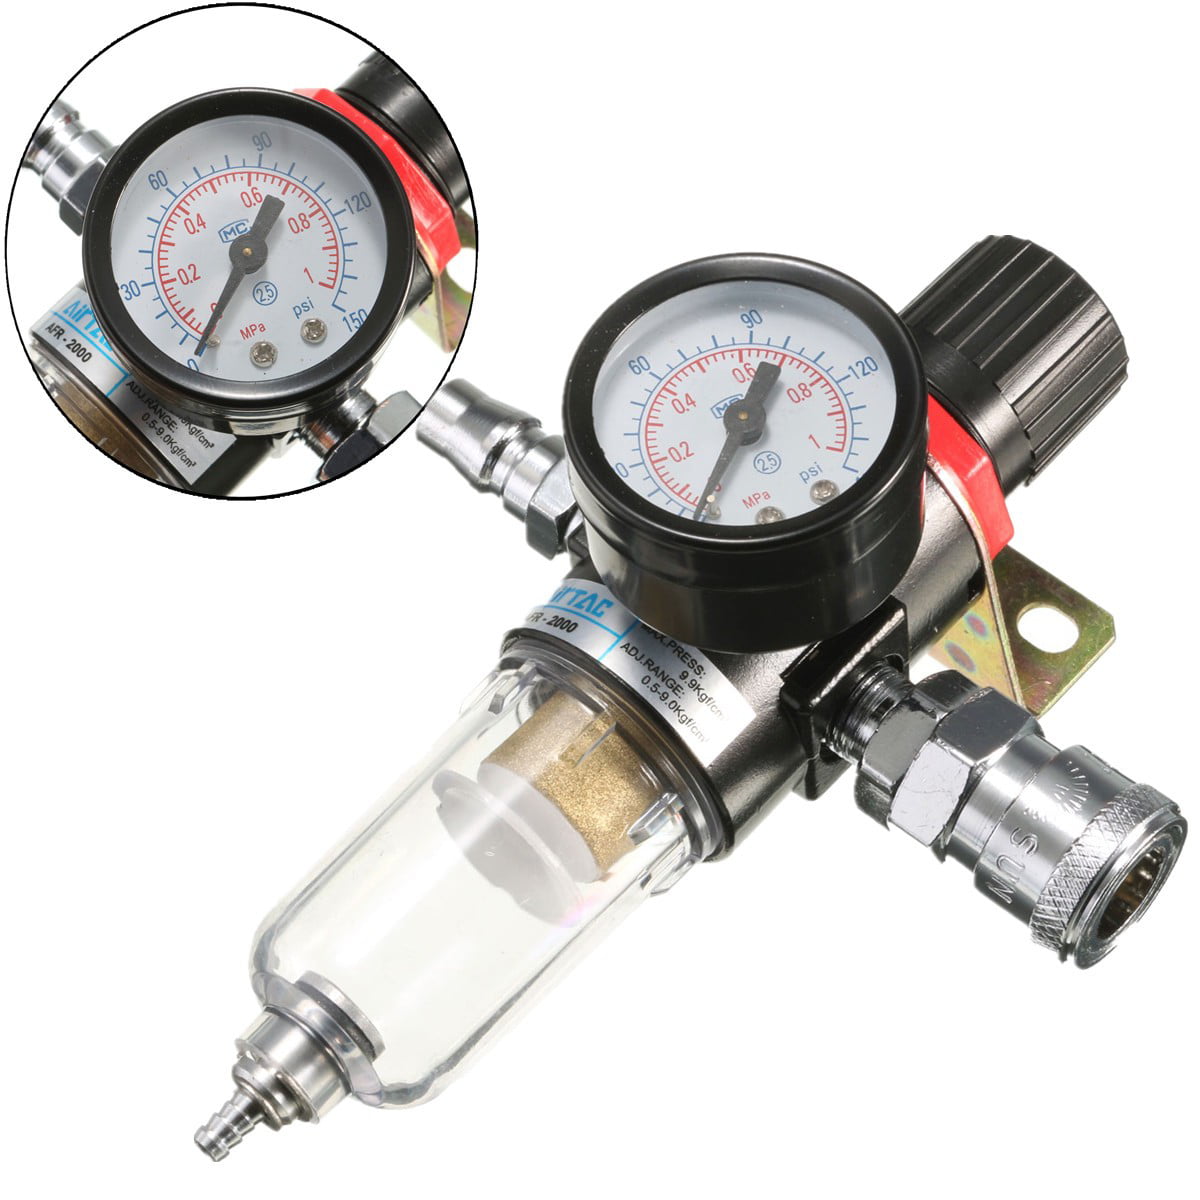 Air Pressure Regulator Oil/Water Separator Trap Filter Airbrush Compressor Best 